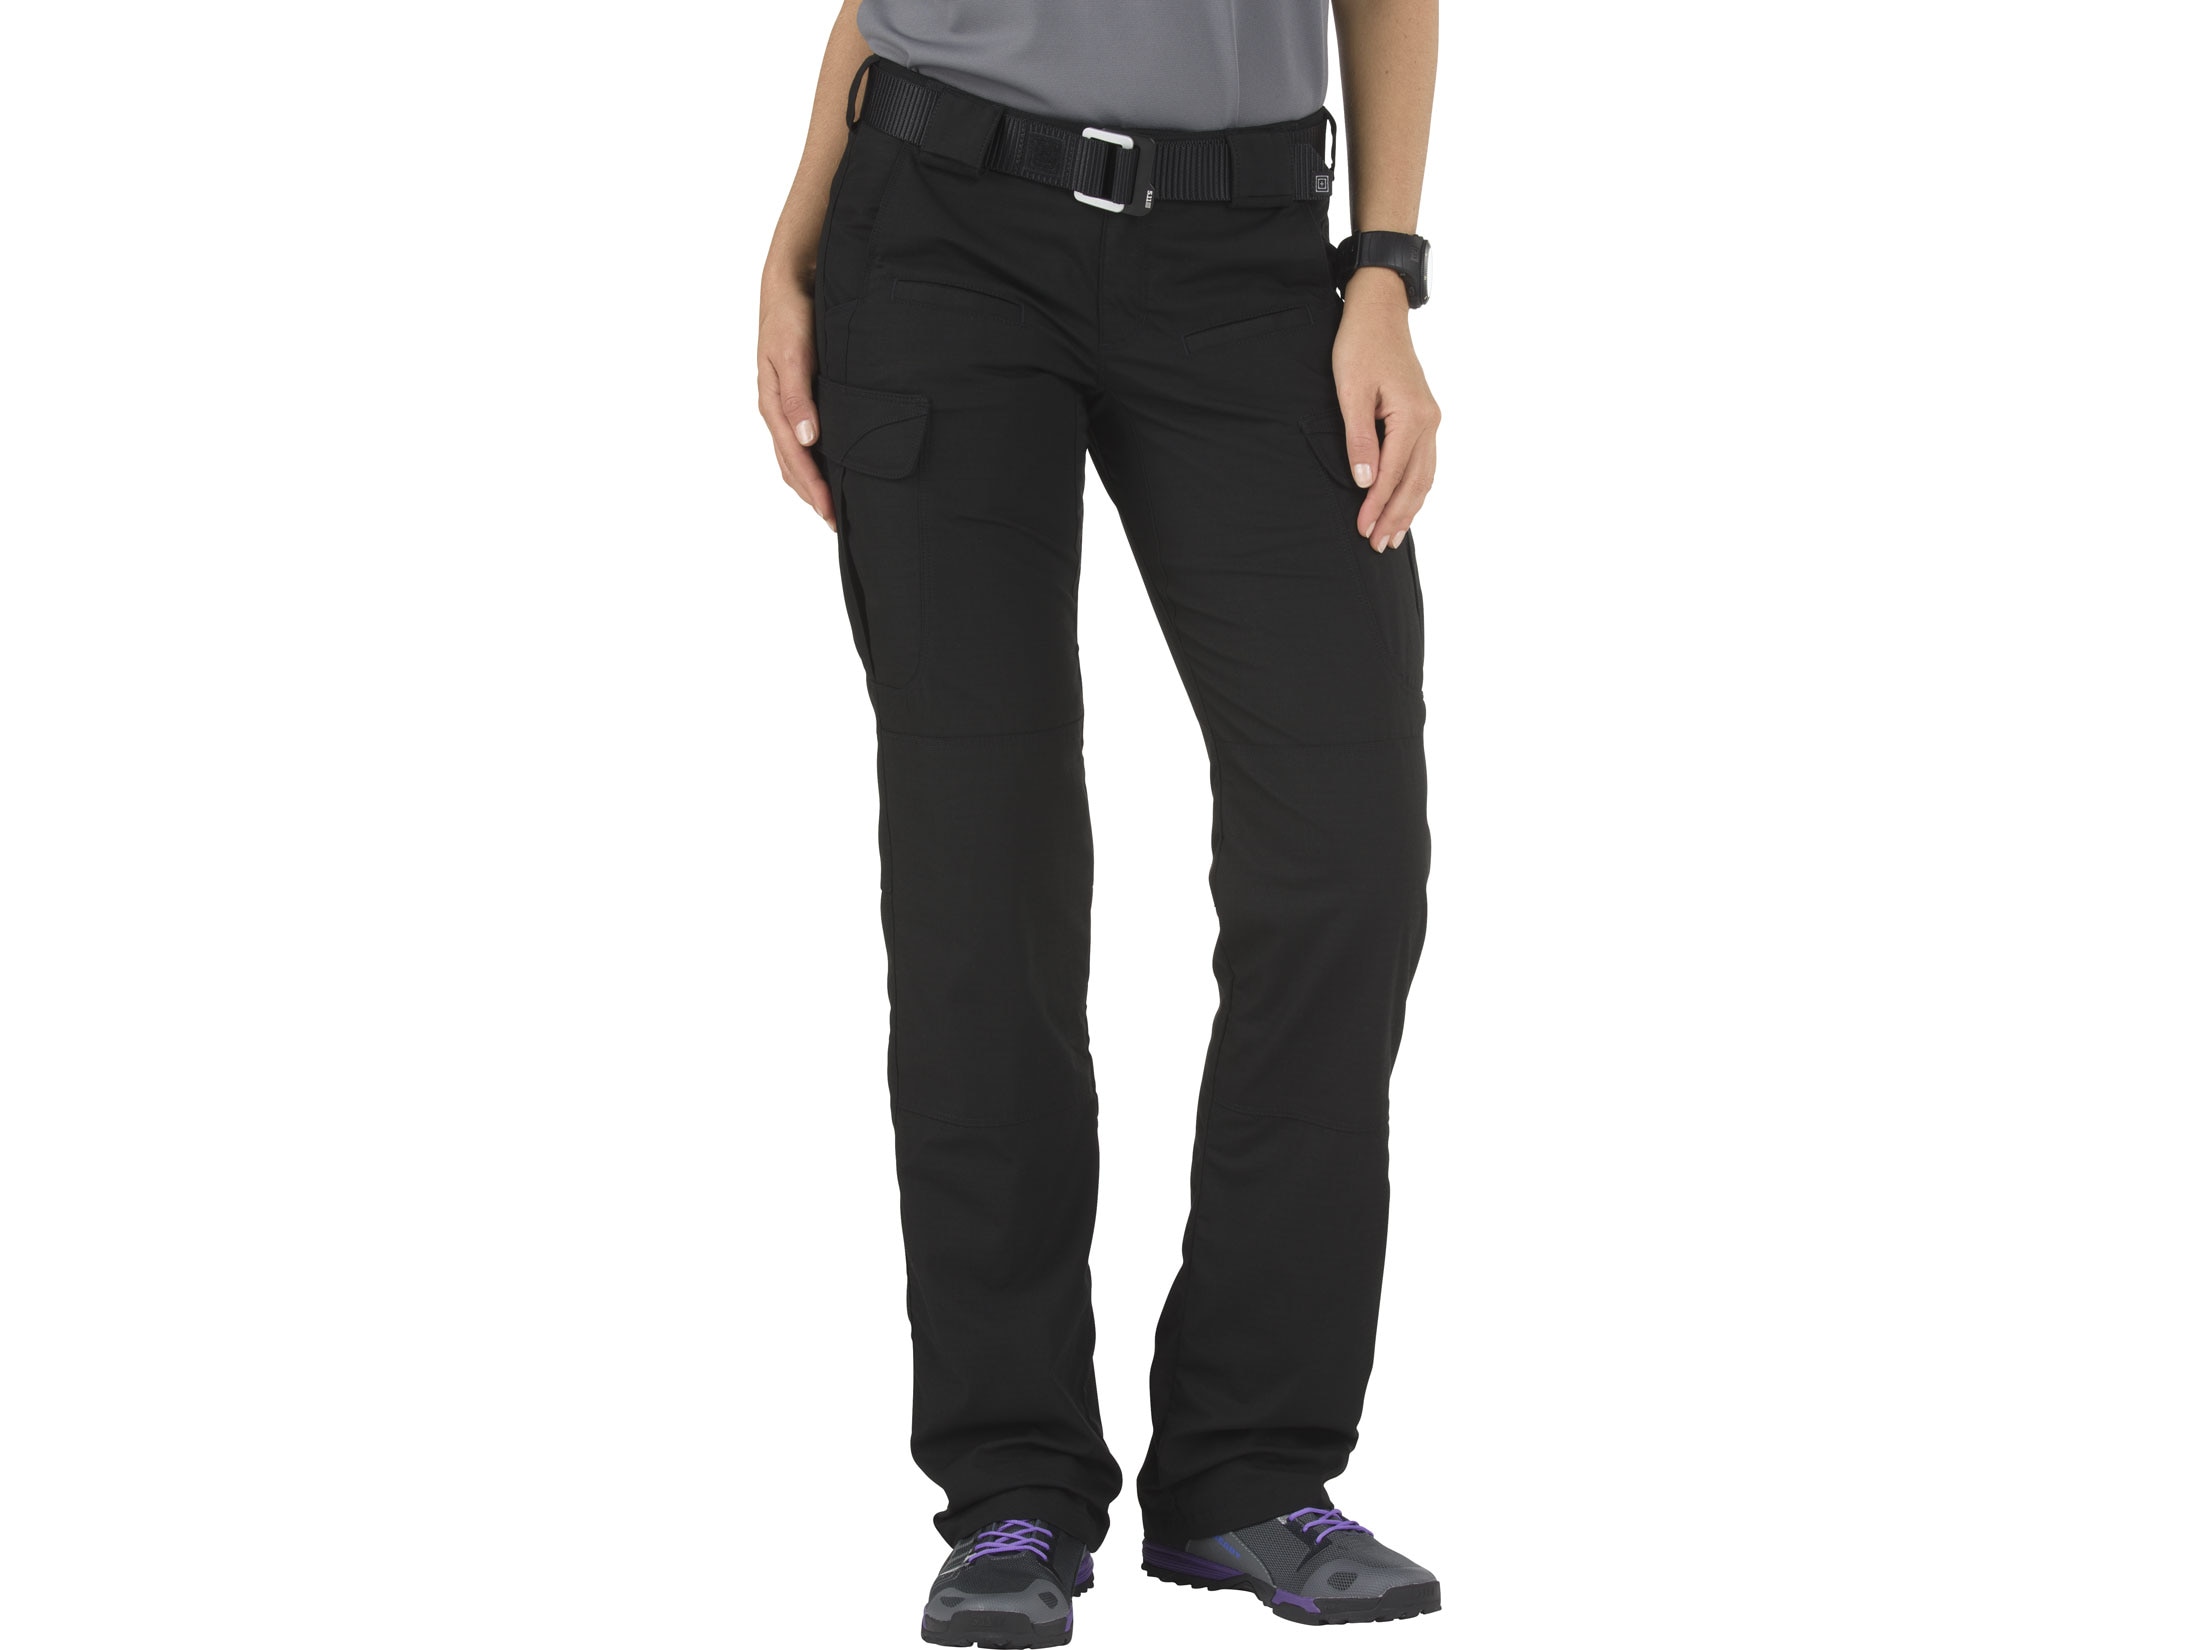 5.11 Women's Stryke Tactical Pants Flex-Tac Polyester Cotton Ripstop